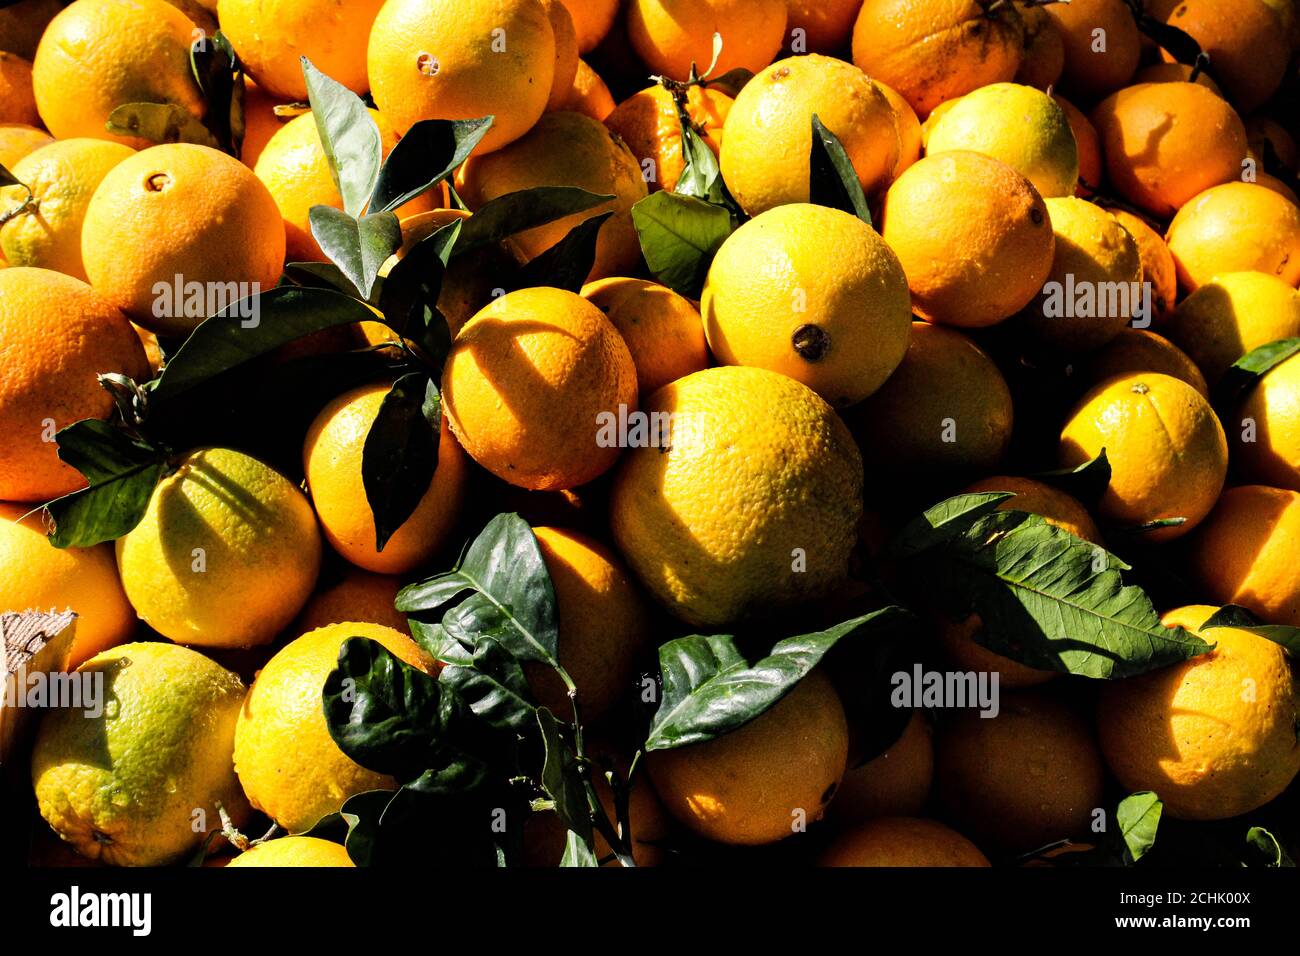 Fresh oranges on display at farmers market Stock Photo